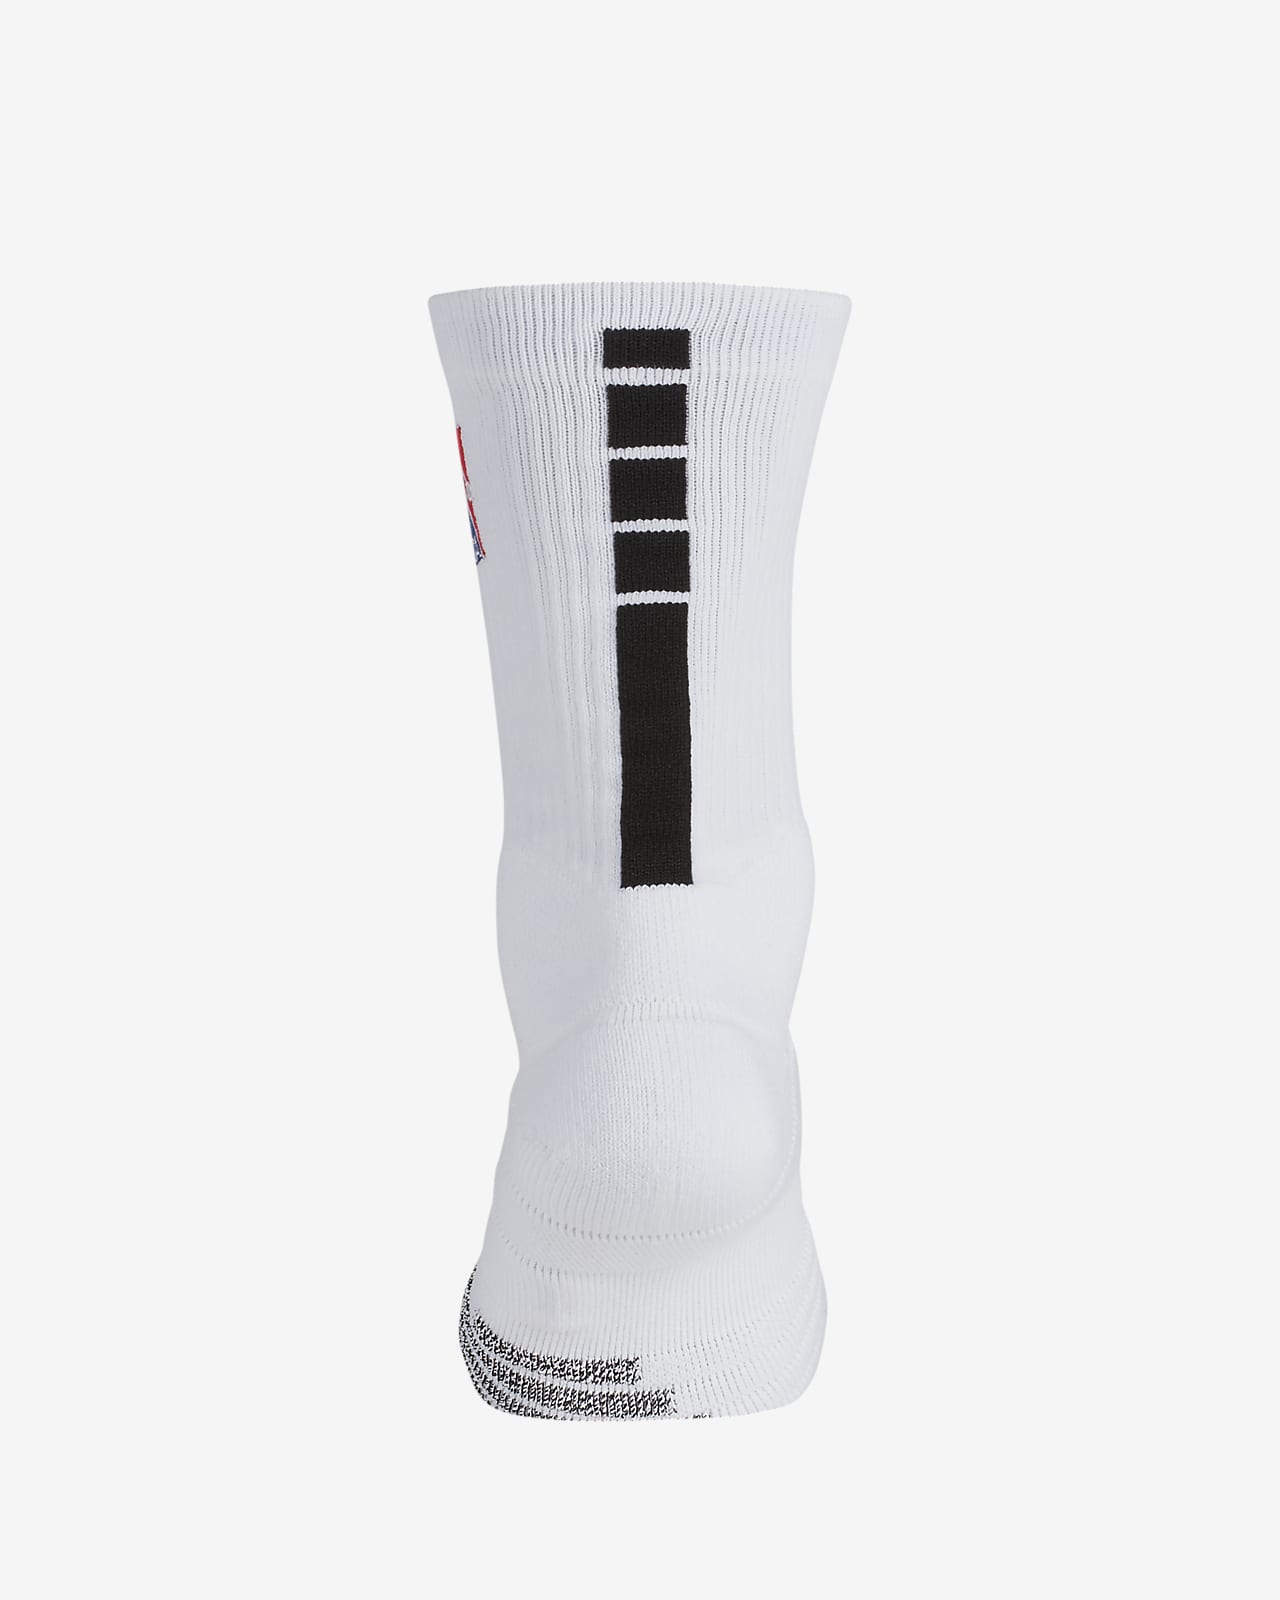 Nike Grip Power Crew Socks-Red